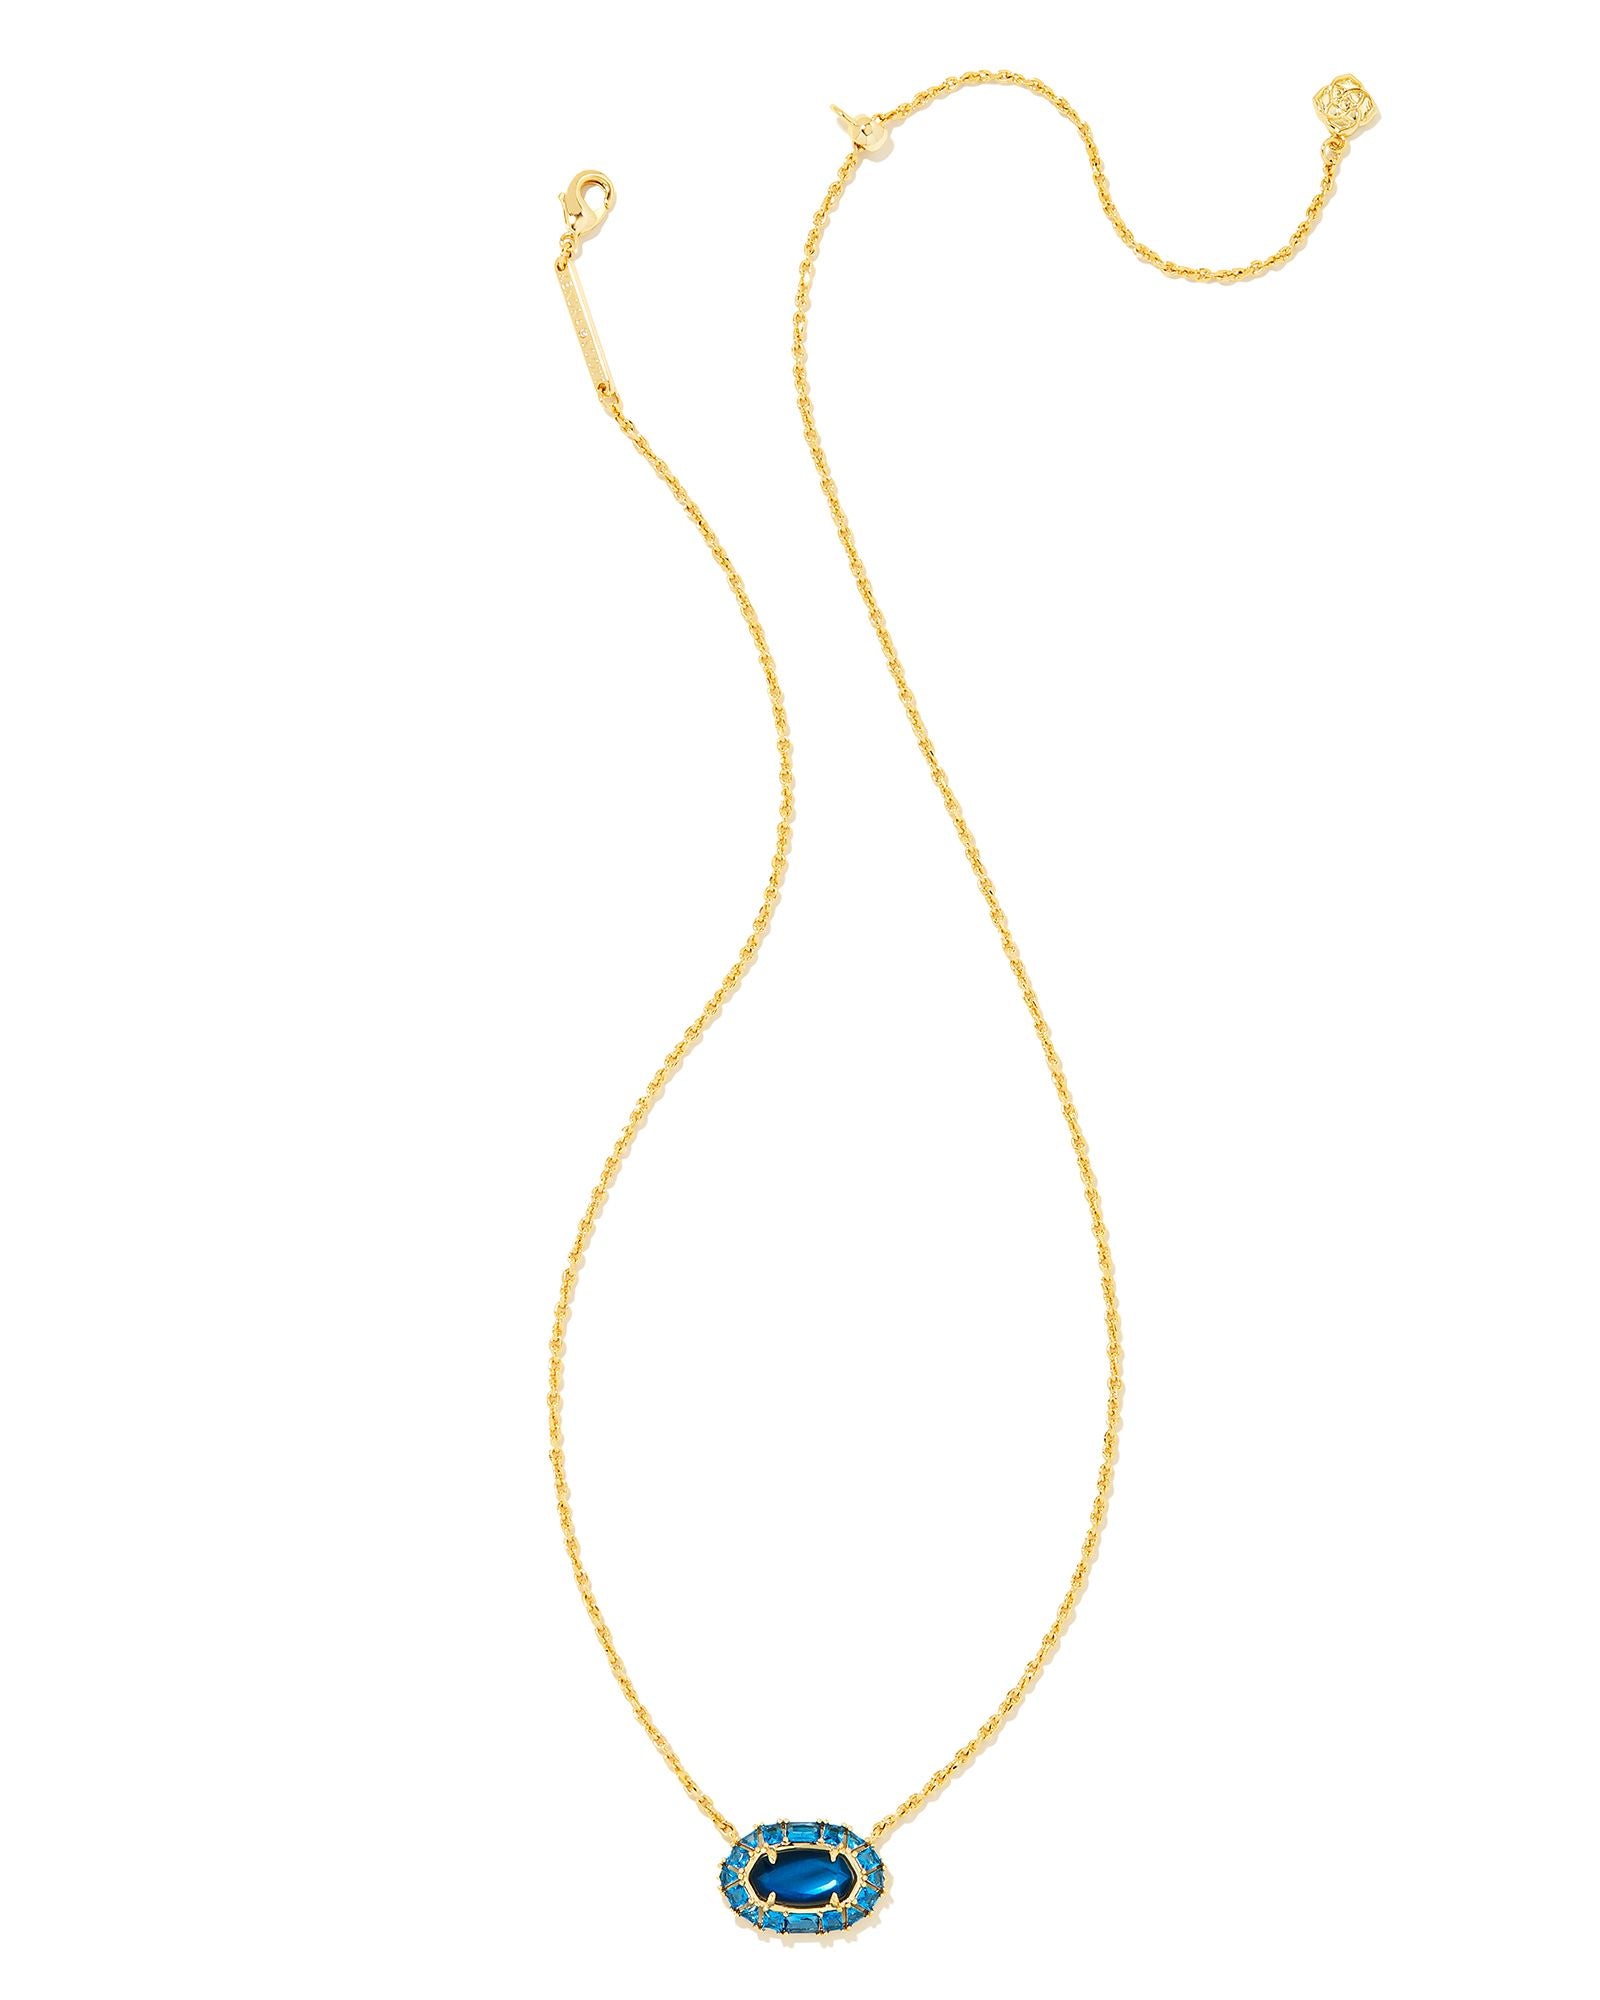 Kendra Scott Jolie Gold Tone Mother of Pearl Long Pendant Necklace | eBay